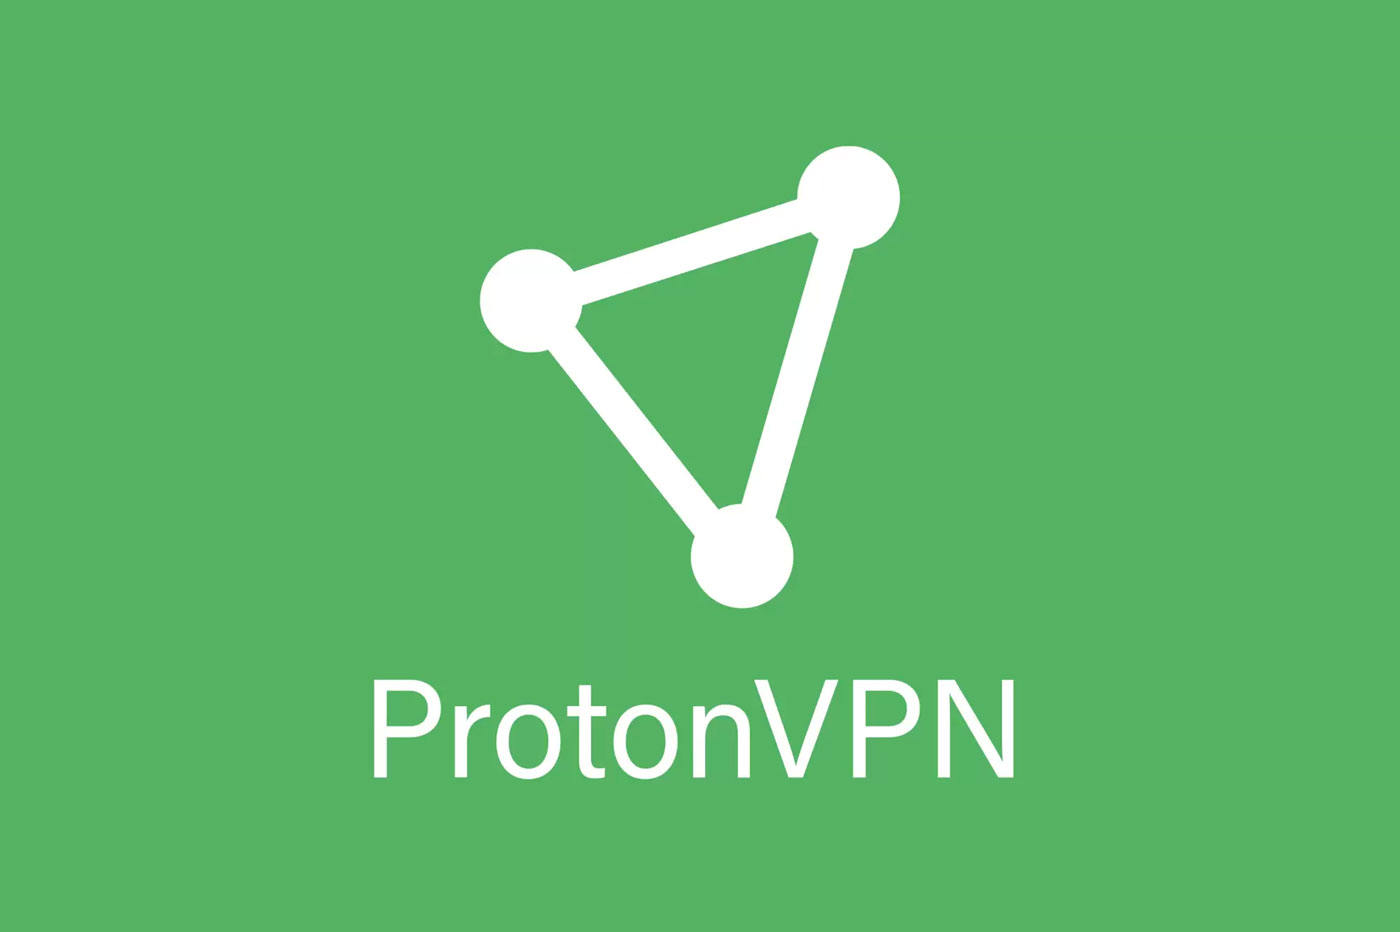 ProtonVPN - Second-fastest overall, fastest upload speeds